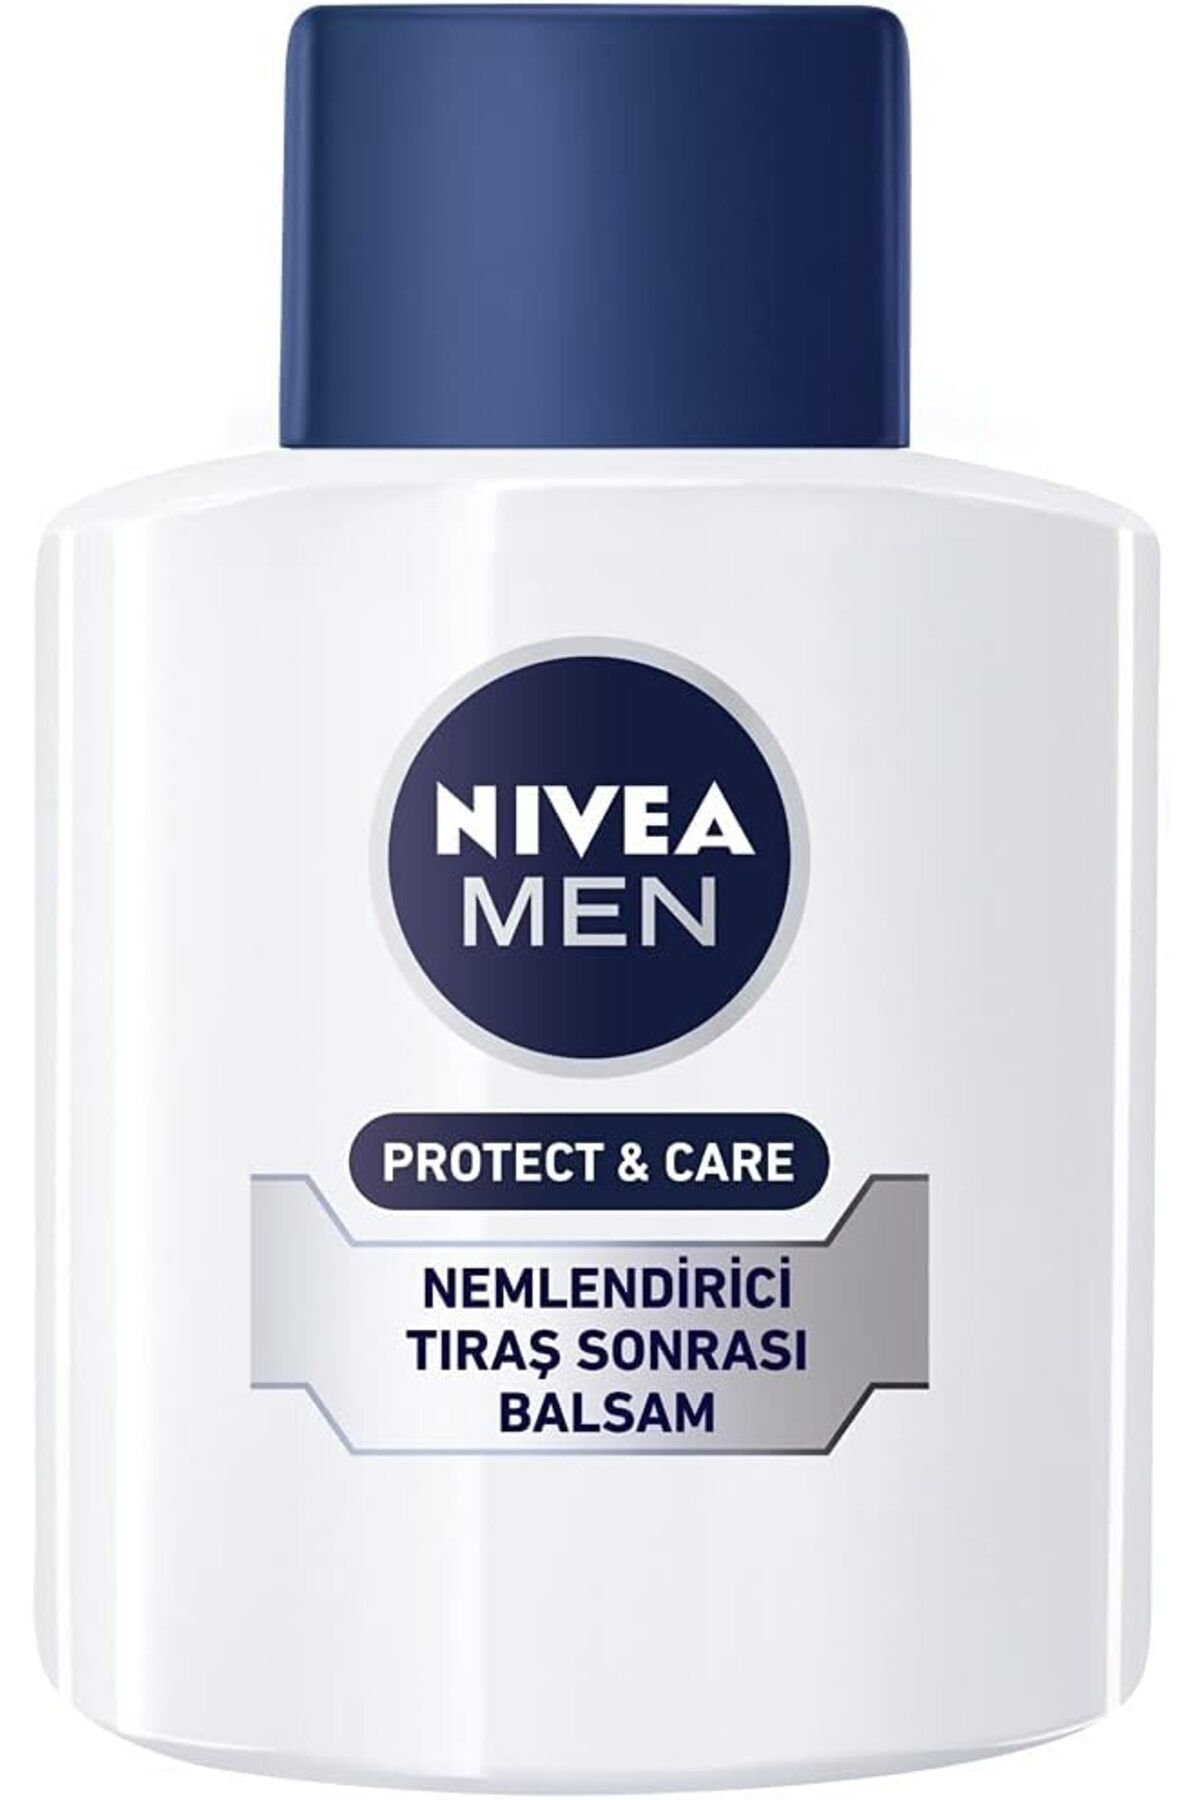 NIVEA مرطوب کننده پس از اصلاح مردانه با مواد مغذی و ضد حساسیت